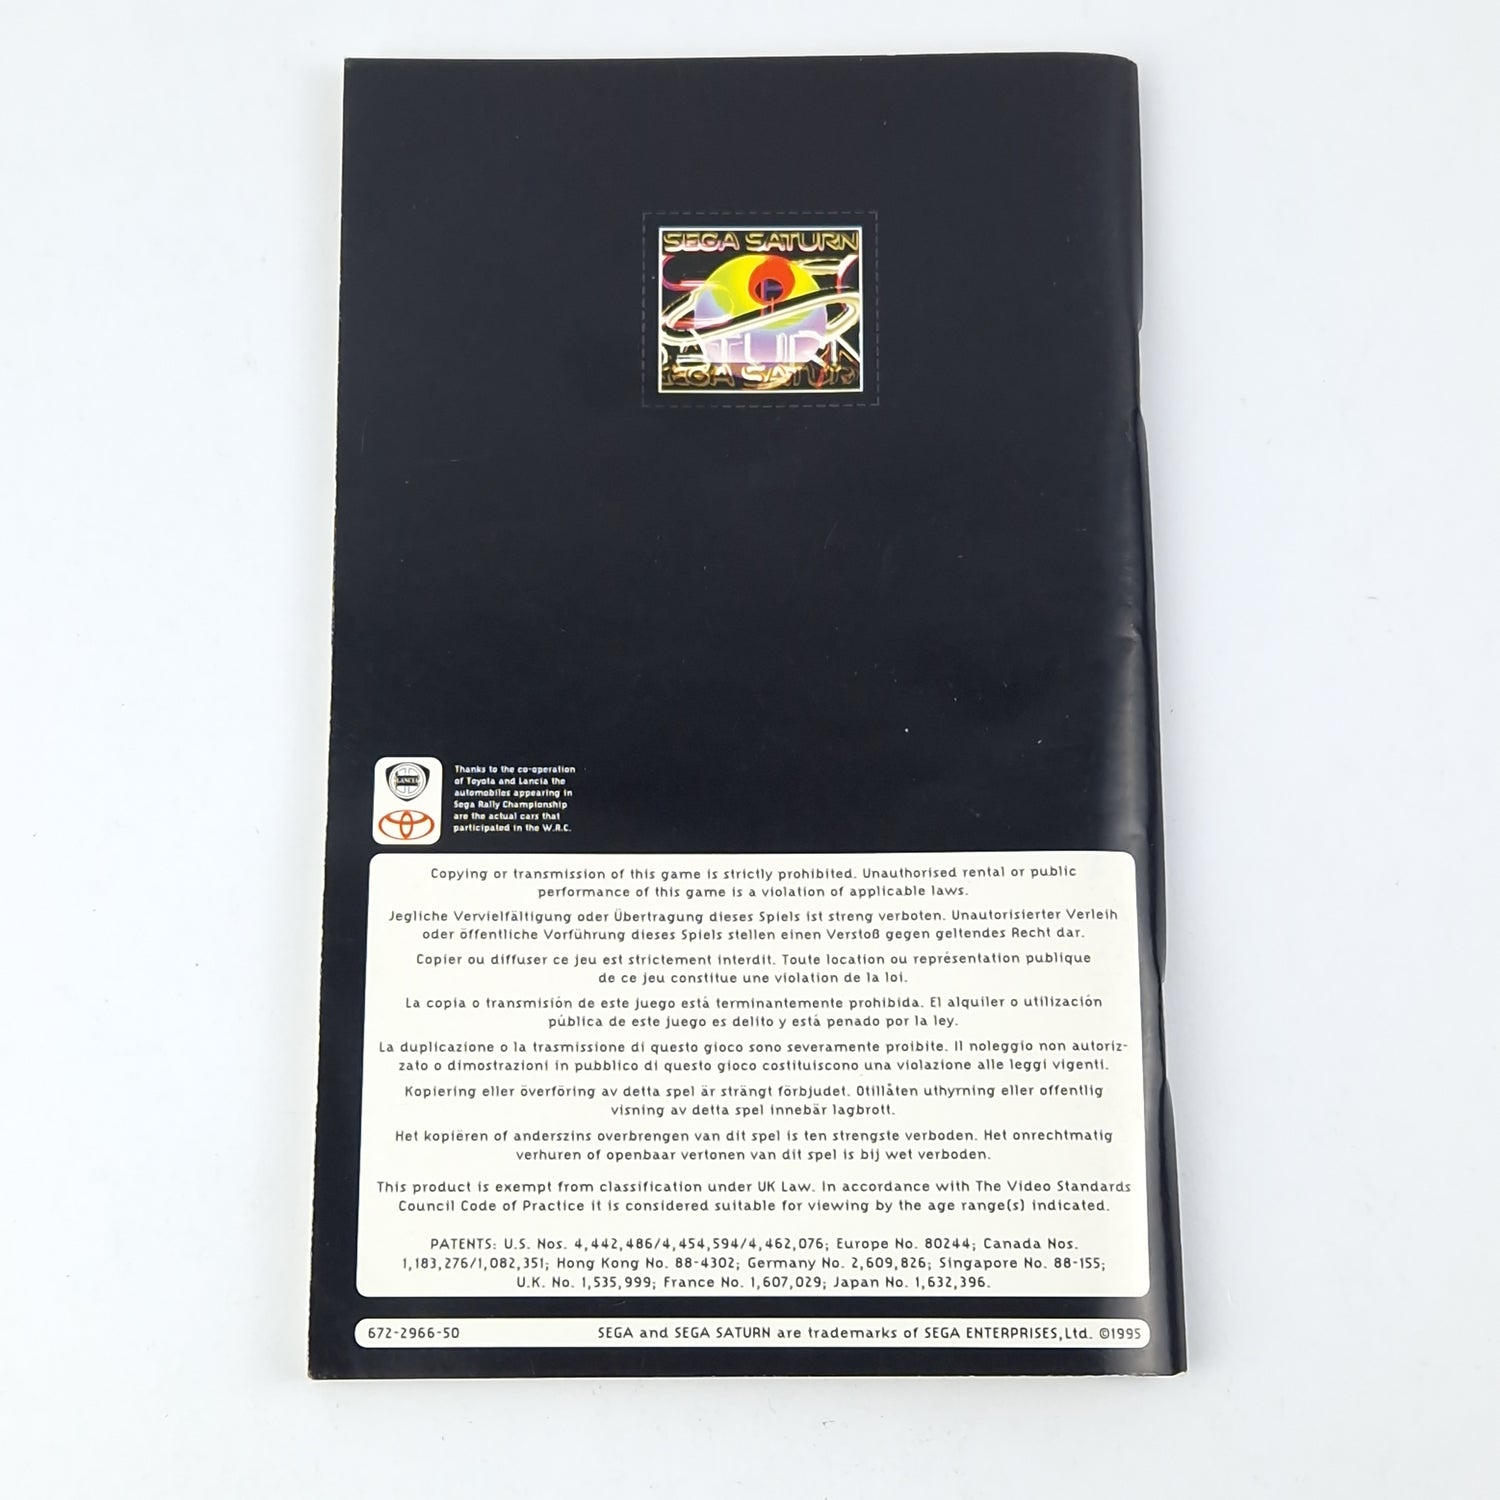 Sega Saturn Game: Sega Rally Championship - CD Instructions OVP / PAL Disc